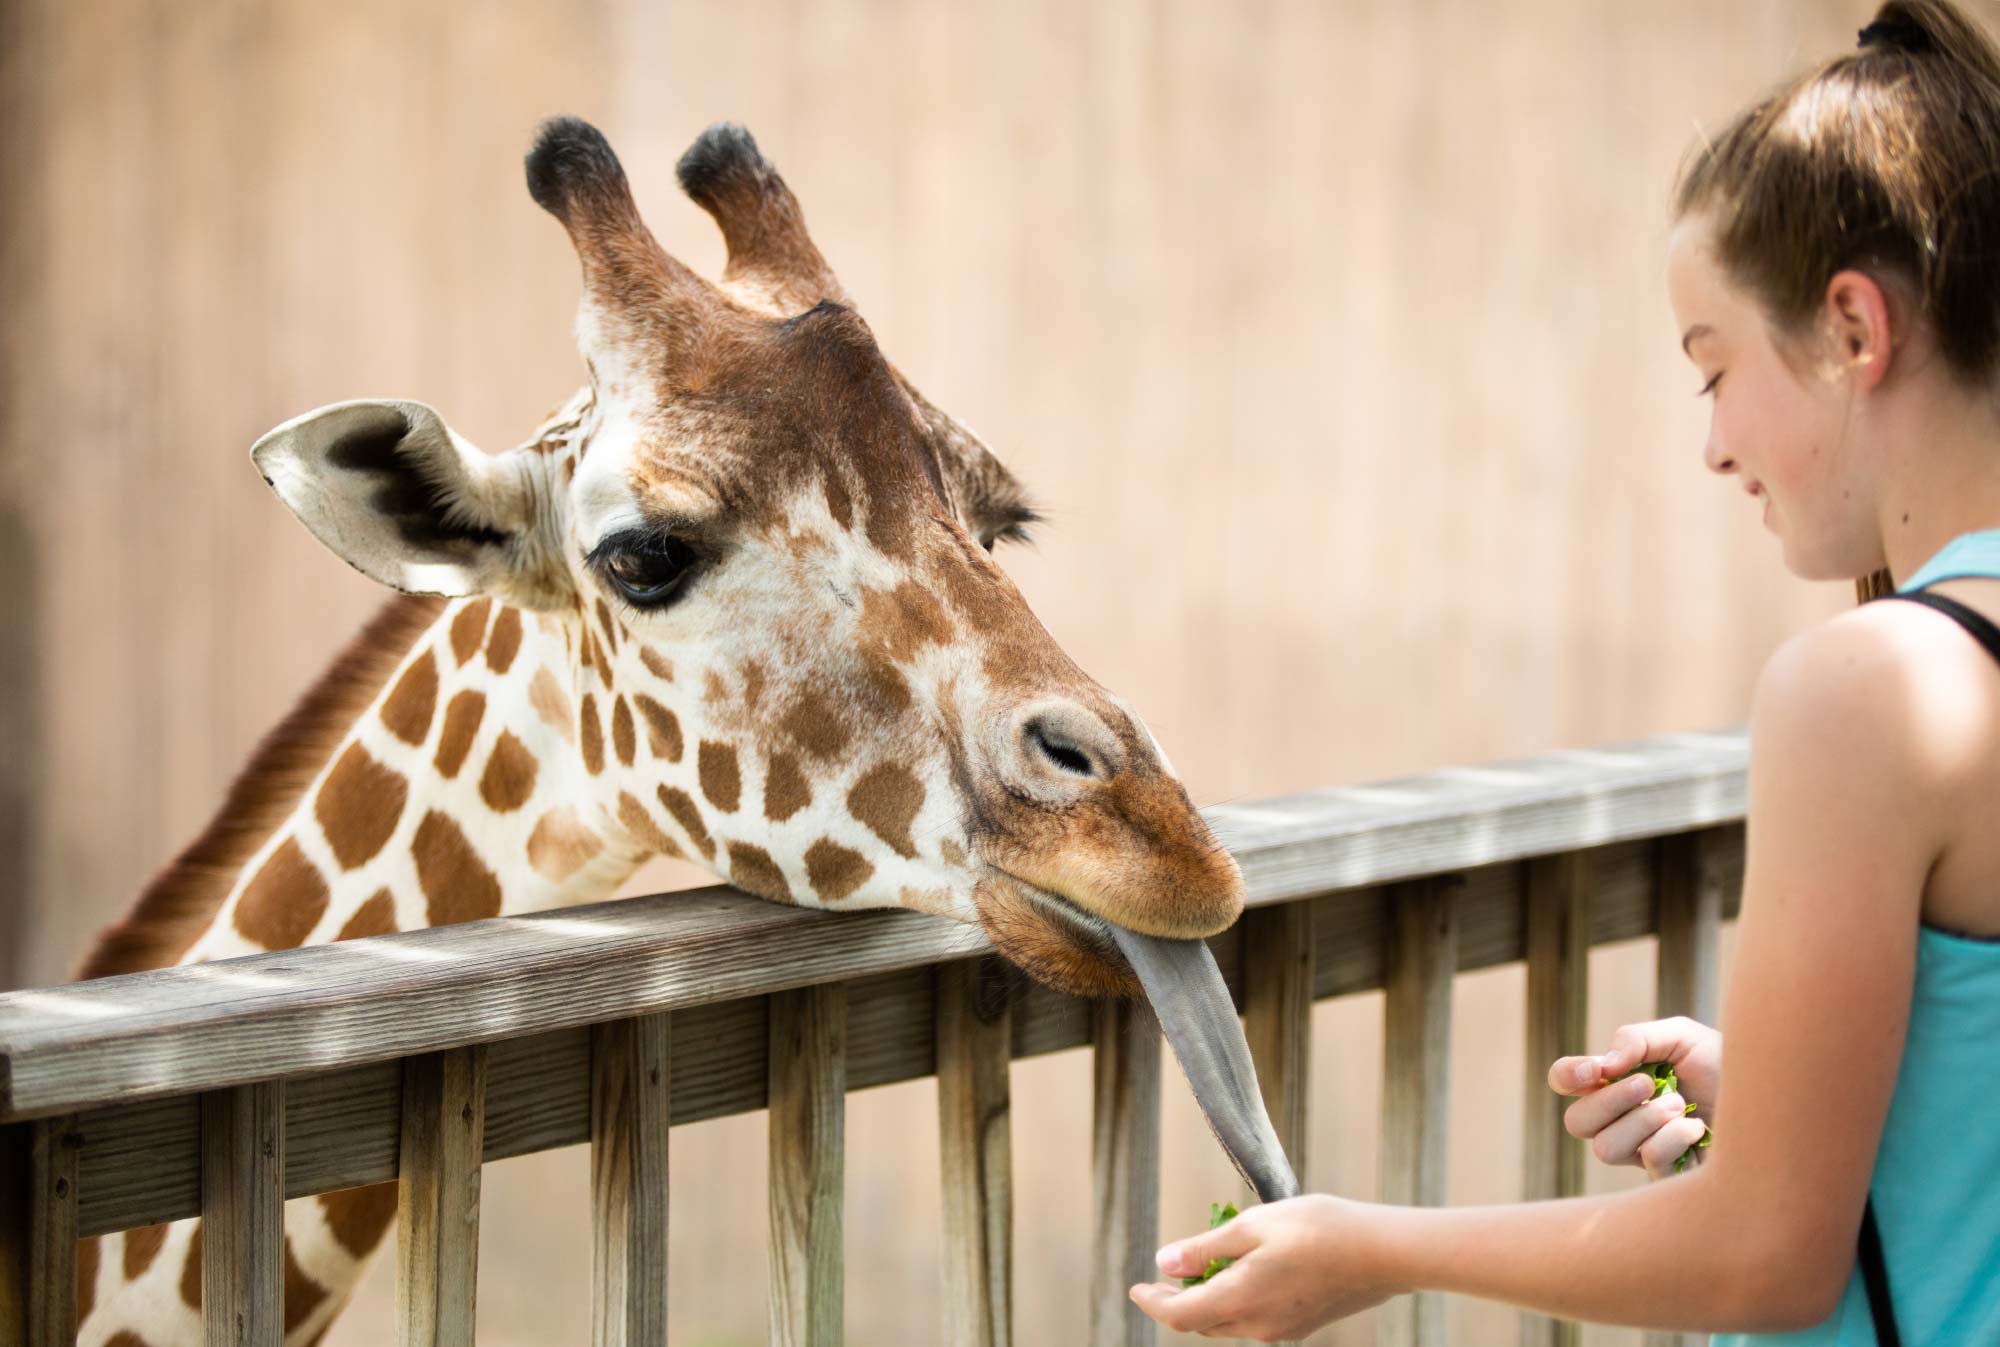 safari park feed giraffes